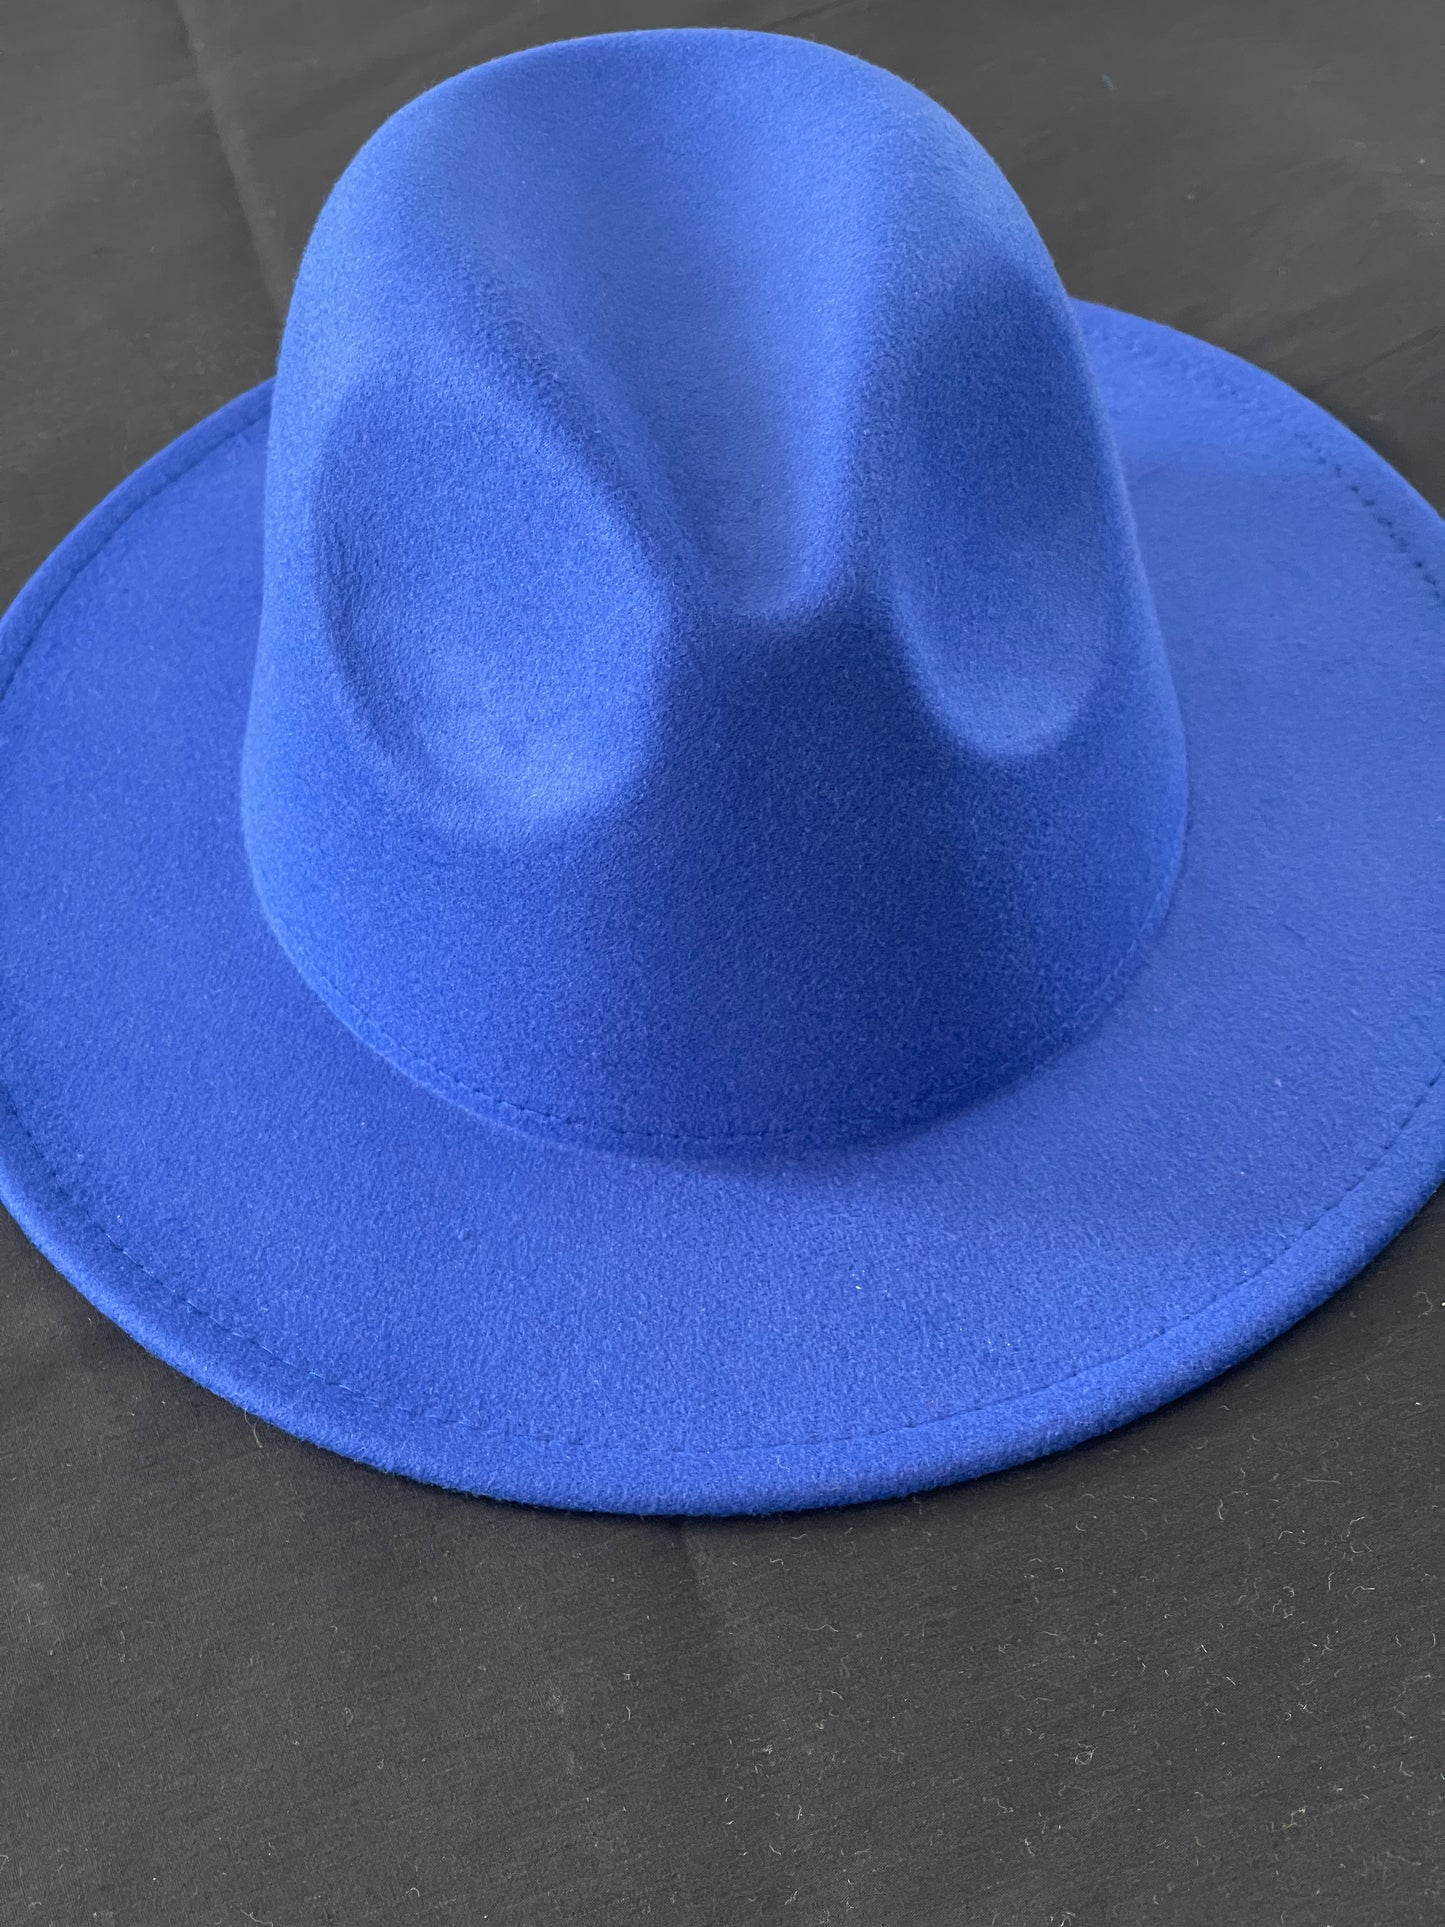 Potae - Royal Blue Fedora Hat and Band